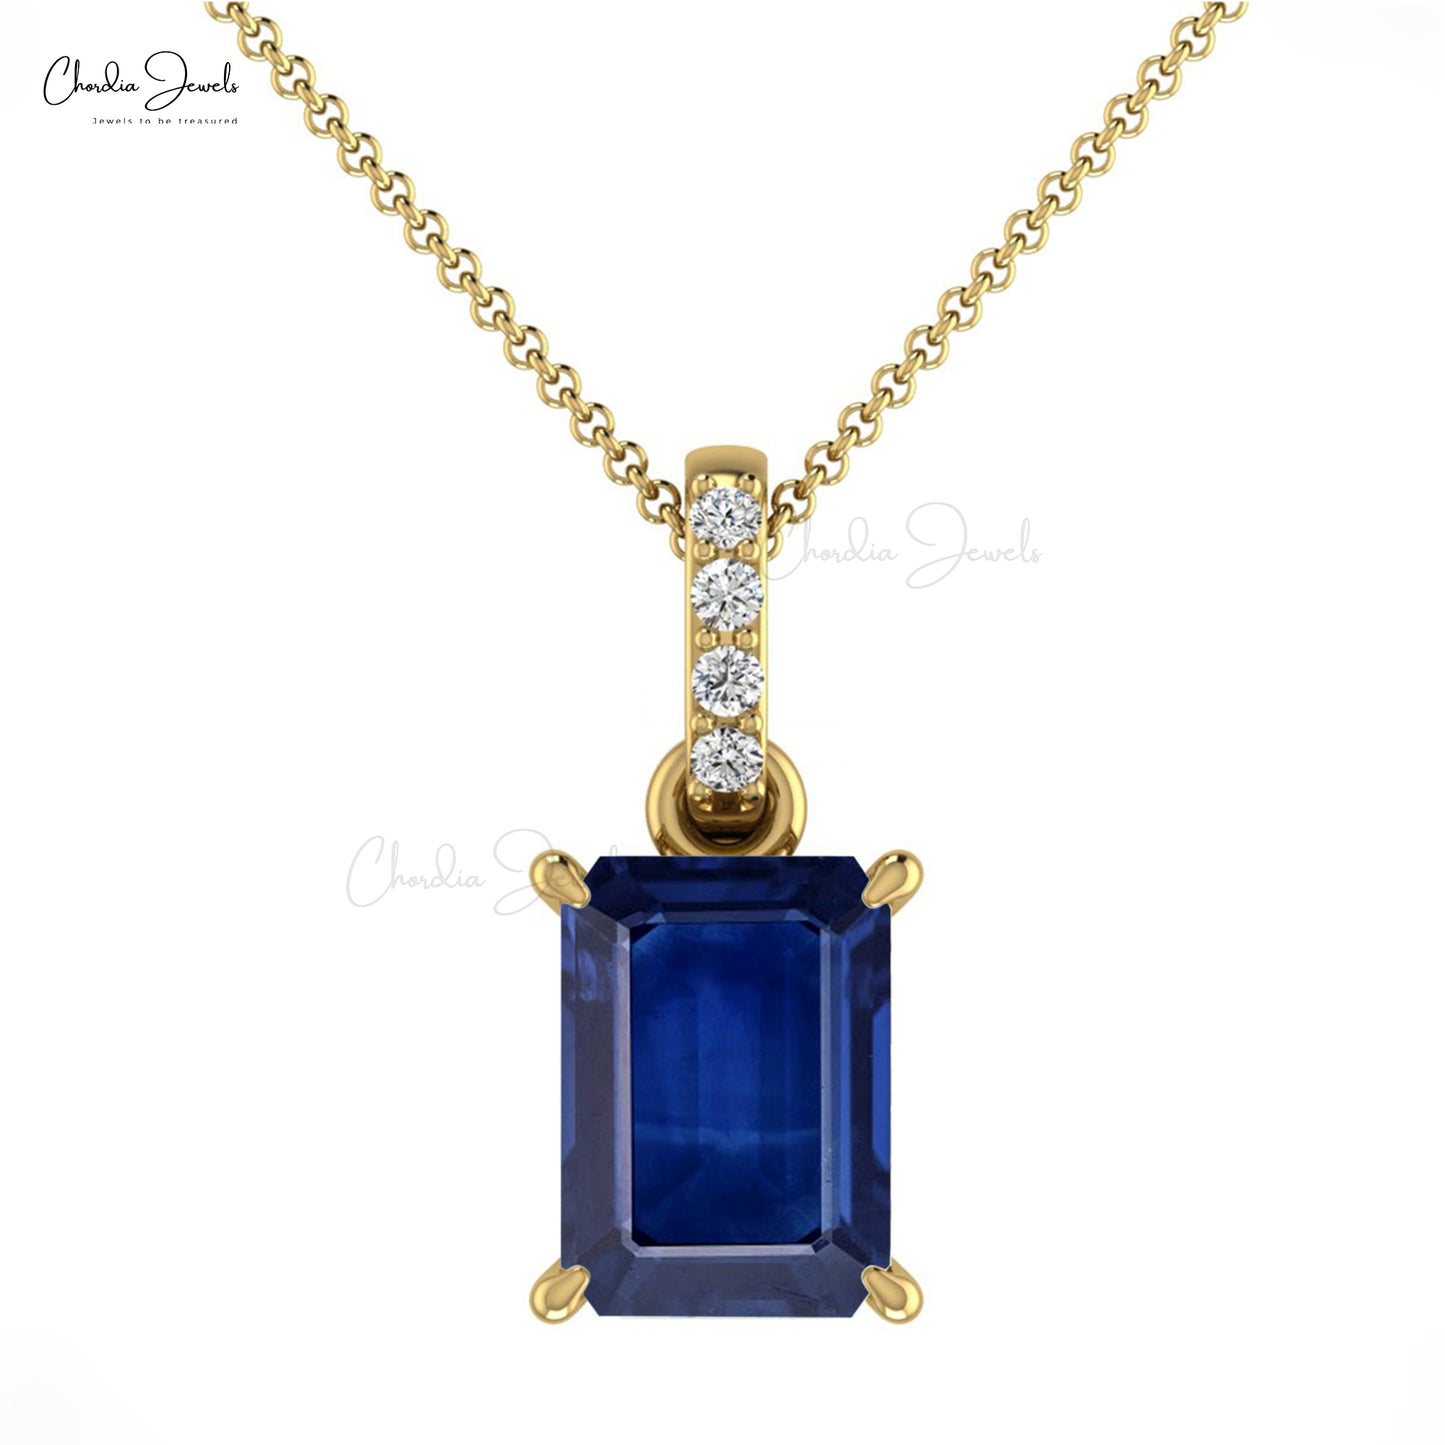 14k Solid Gold White Diamond Natural Blue Sapphire Pendant 0.80 Carat Emerald Cut Octagon Handmade Dangling Pendant